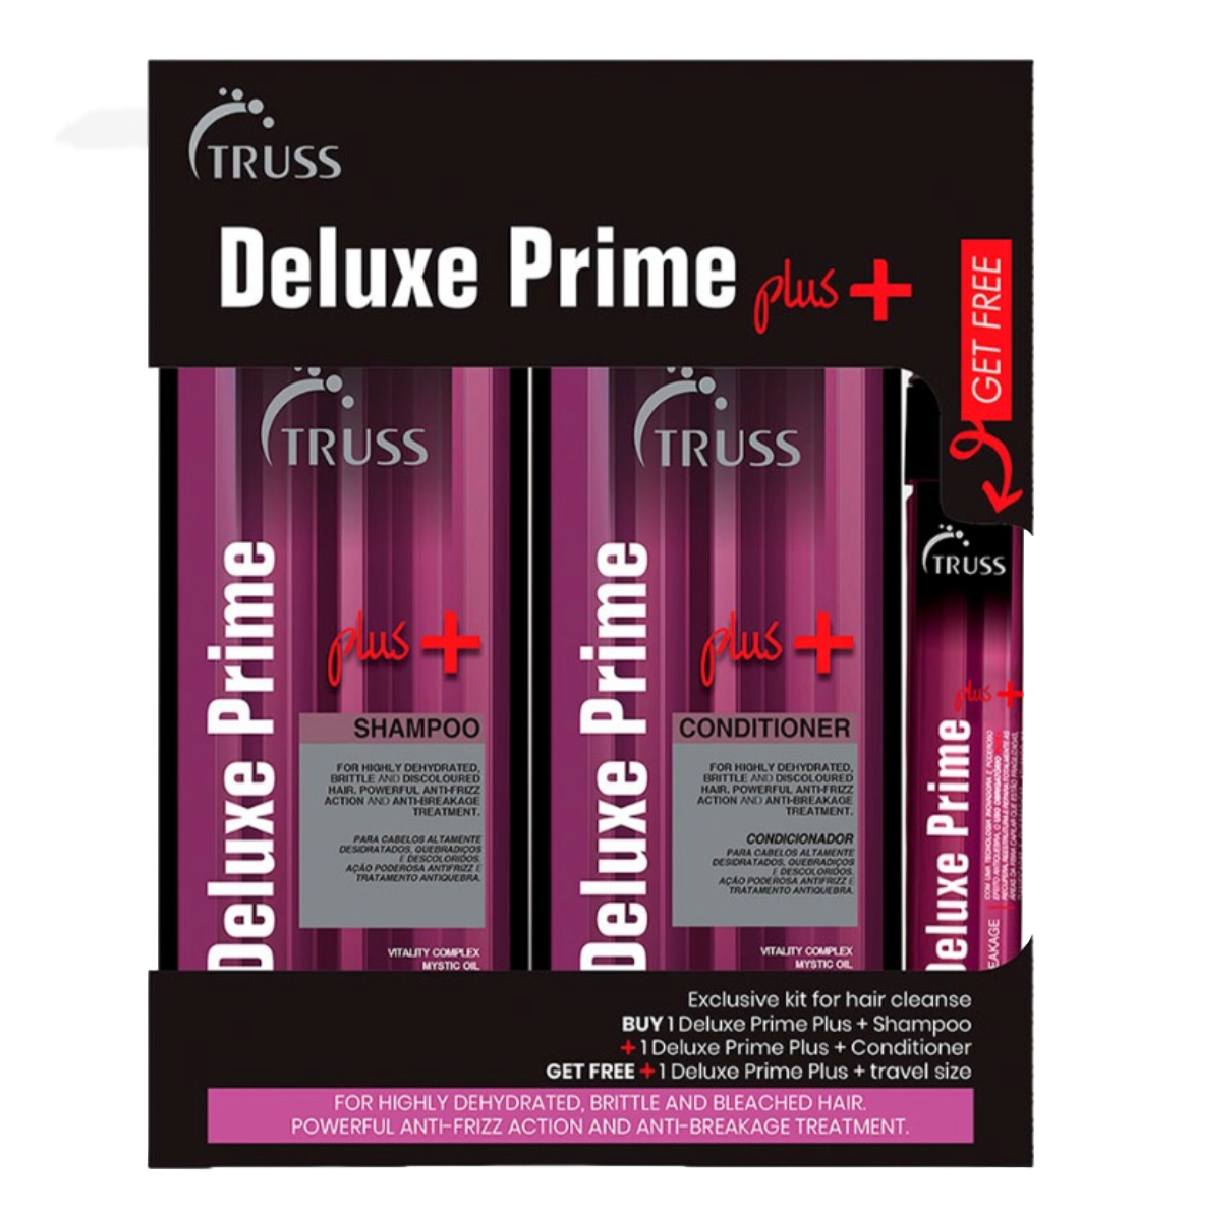 Kit Truss Deluxe Prime Plus+ Shampoo 300 ml+Conditioner 300 ml= Free Deluxe Prime 30ml